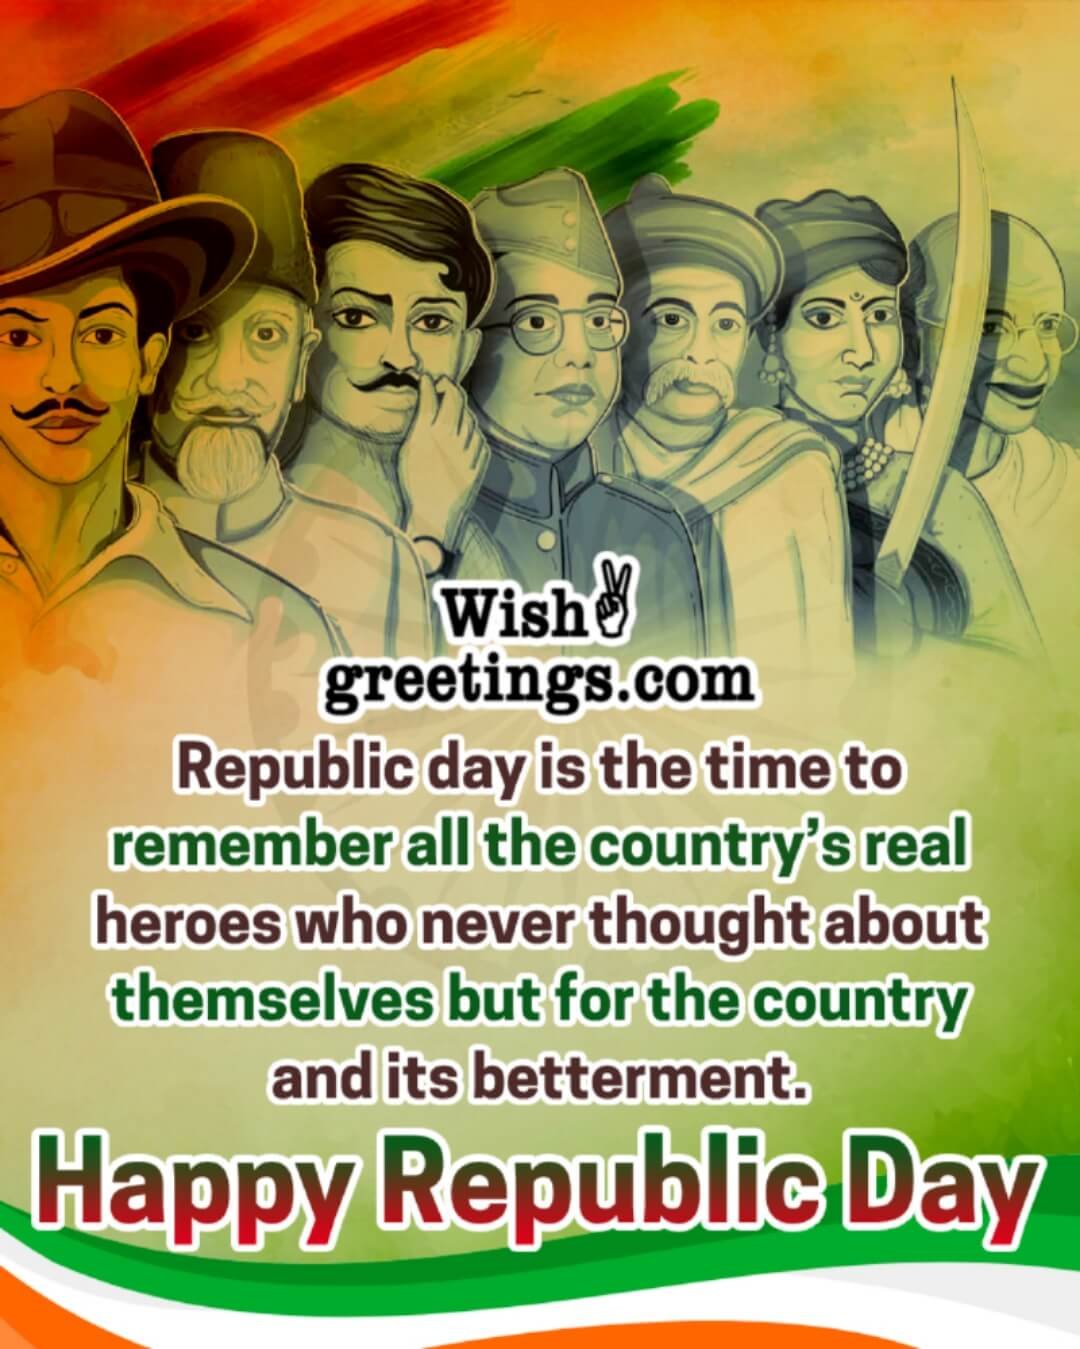 Happy Republic Day Message Image